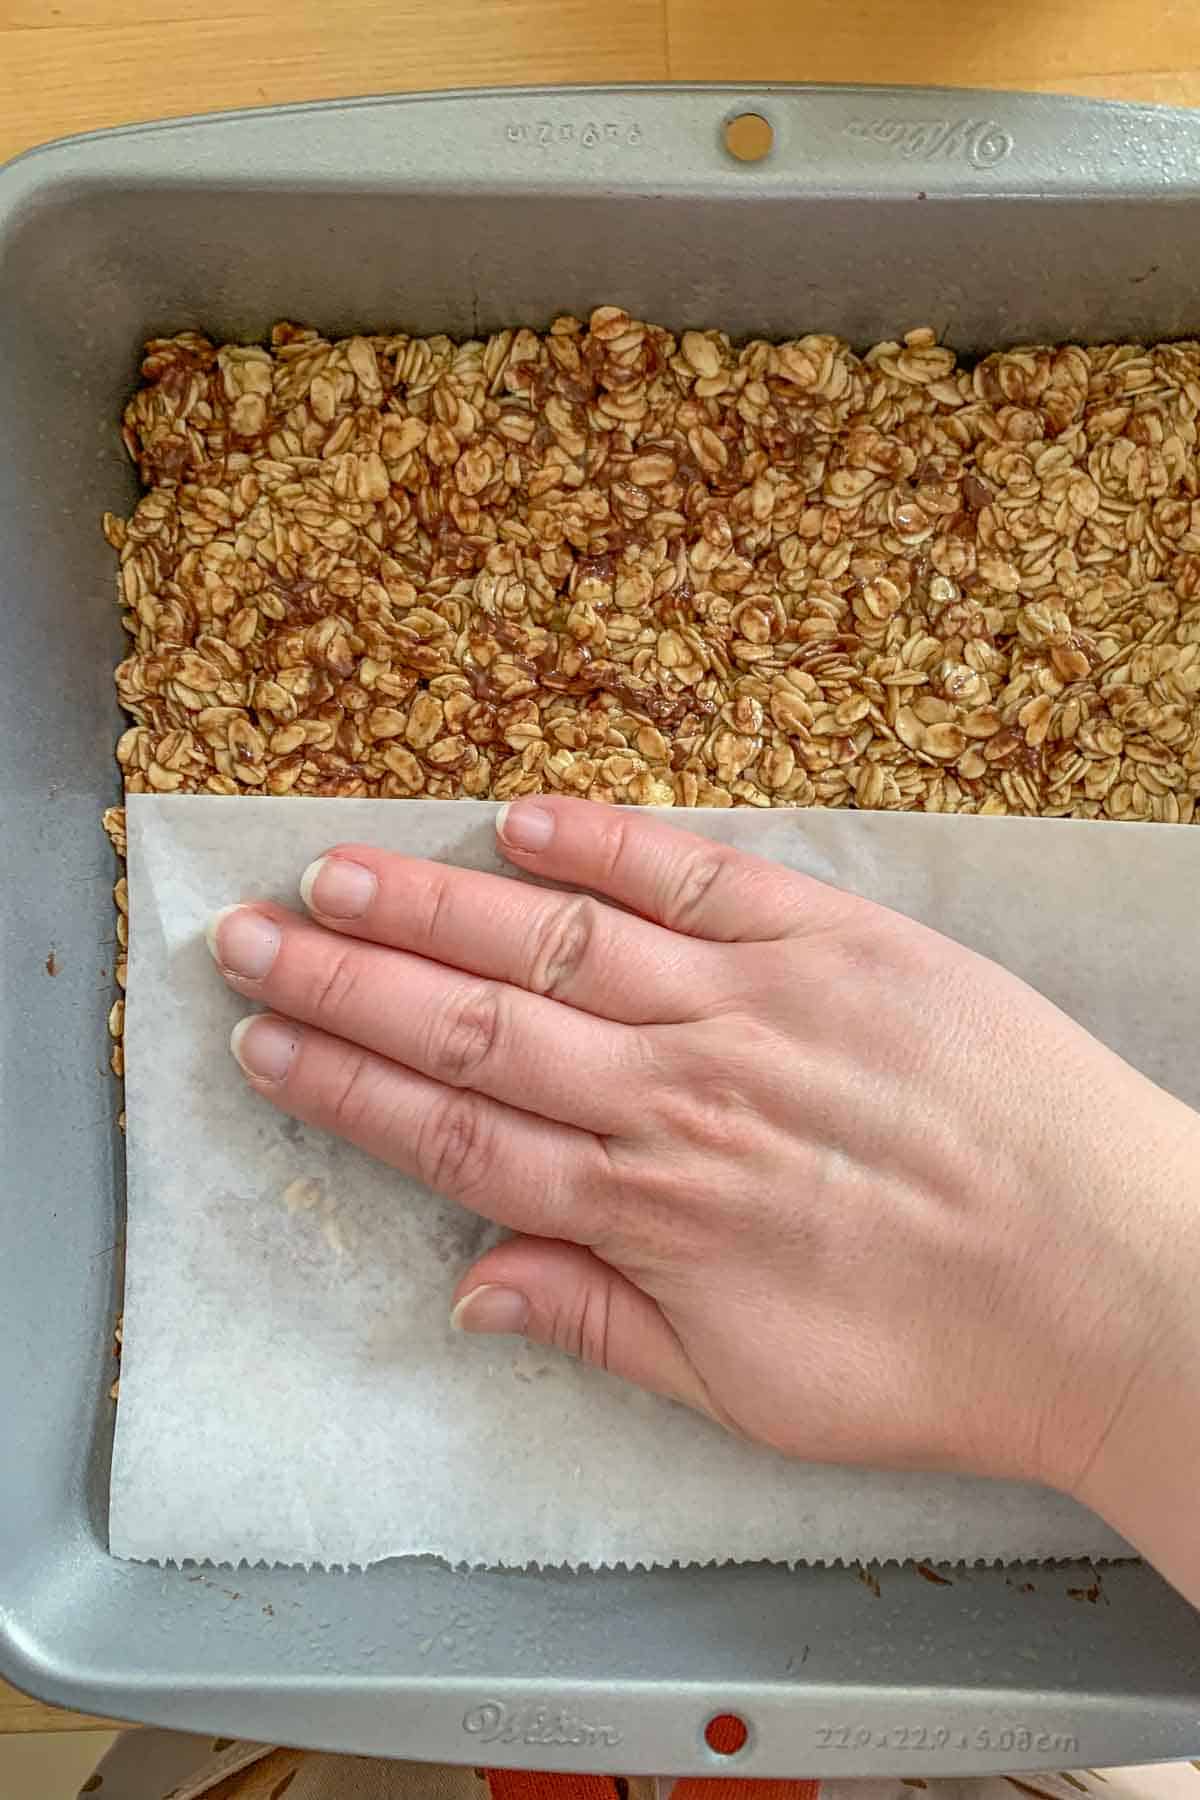 pressing granola bar mixture into pan